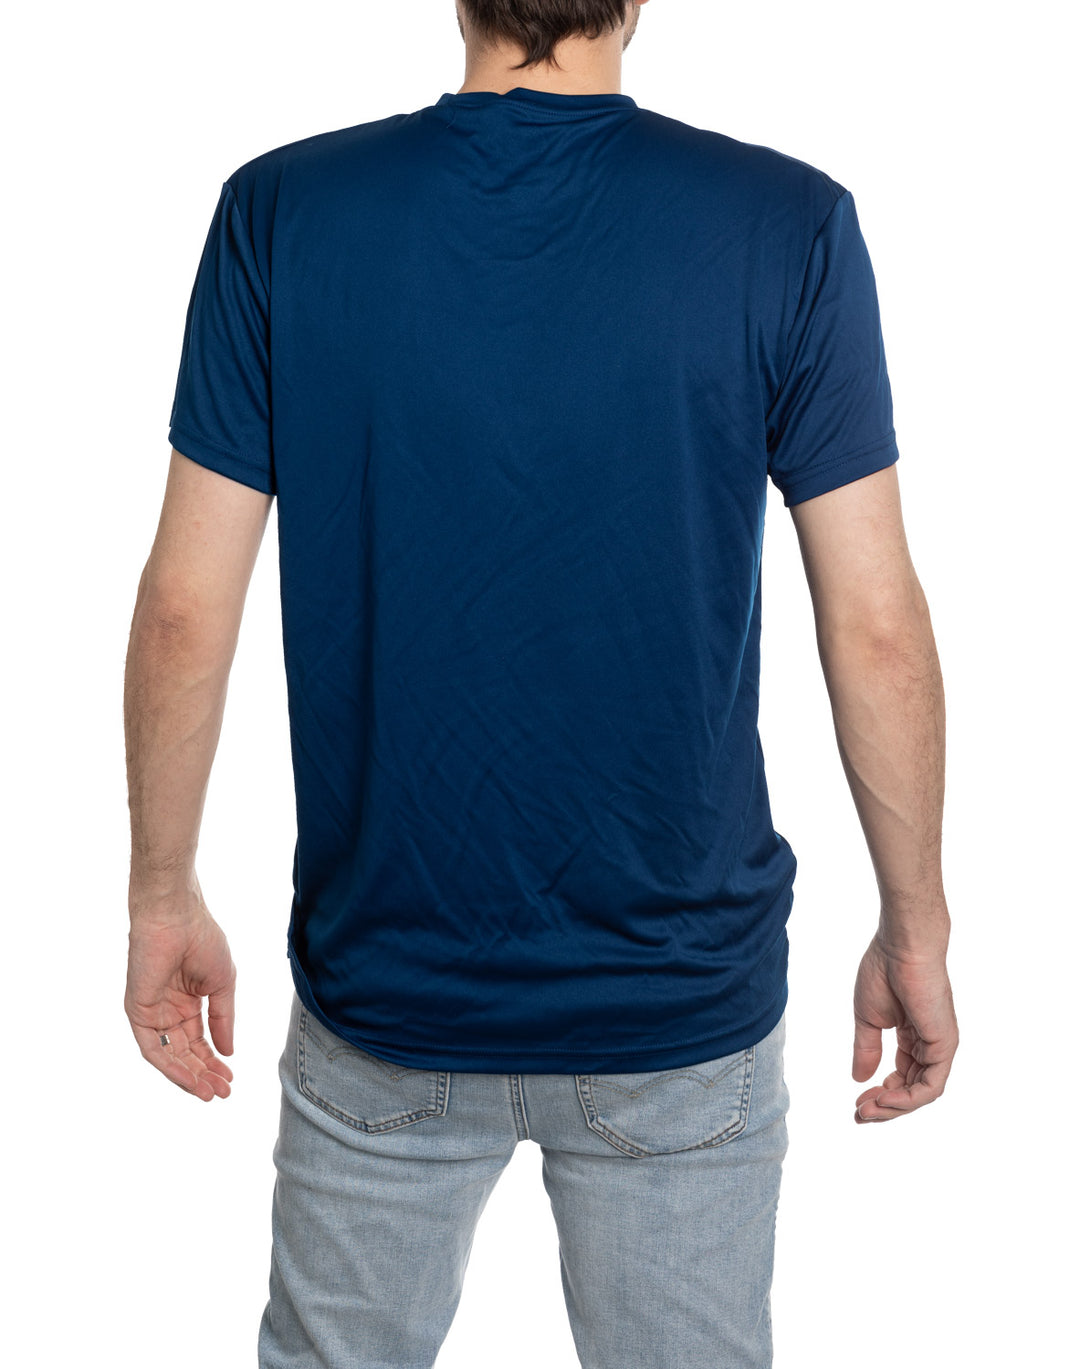 Niagara River Lions Polyester T-Shirt